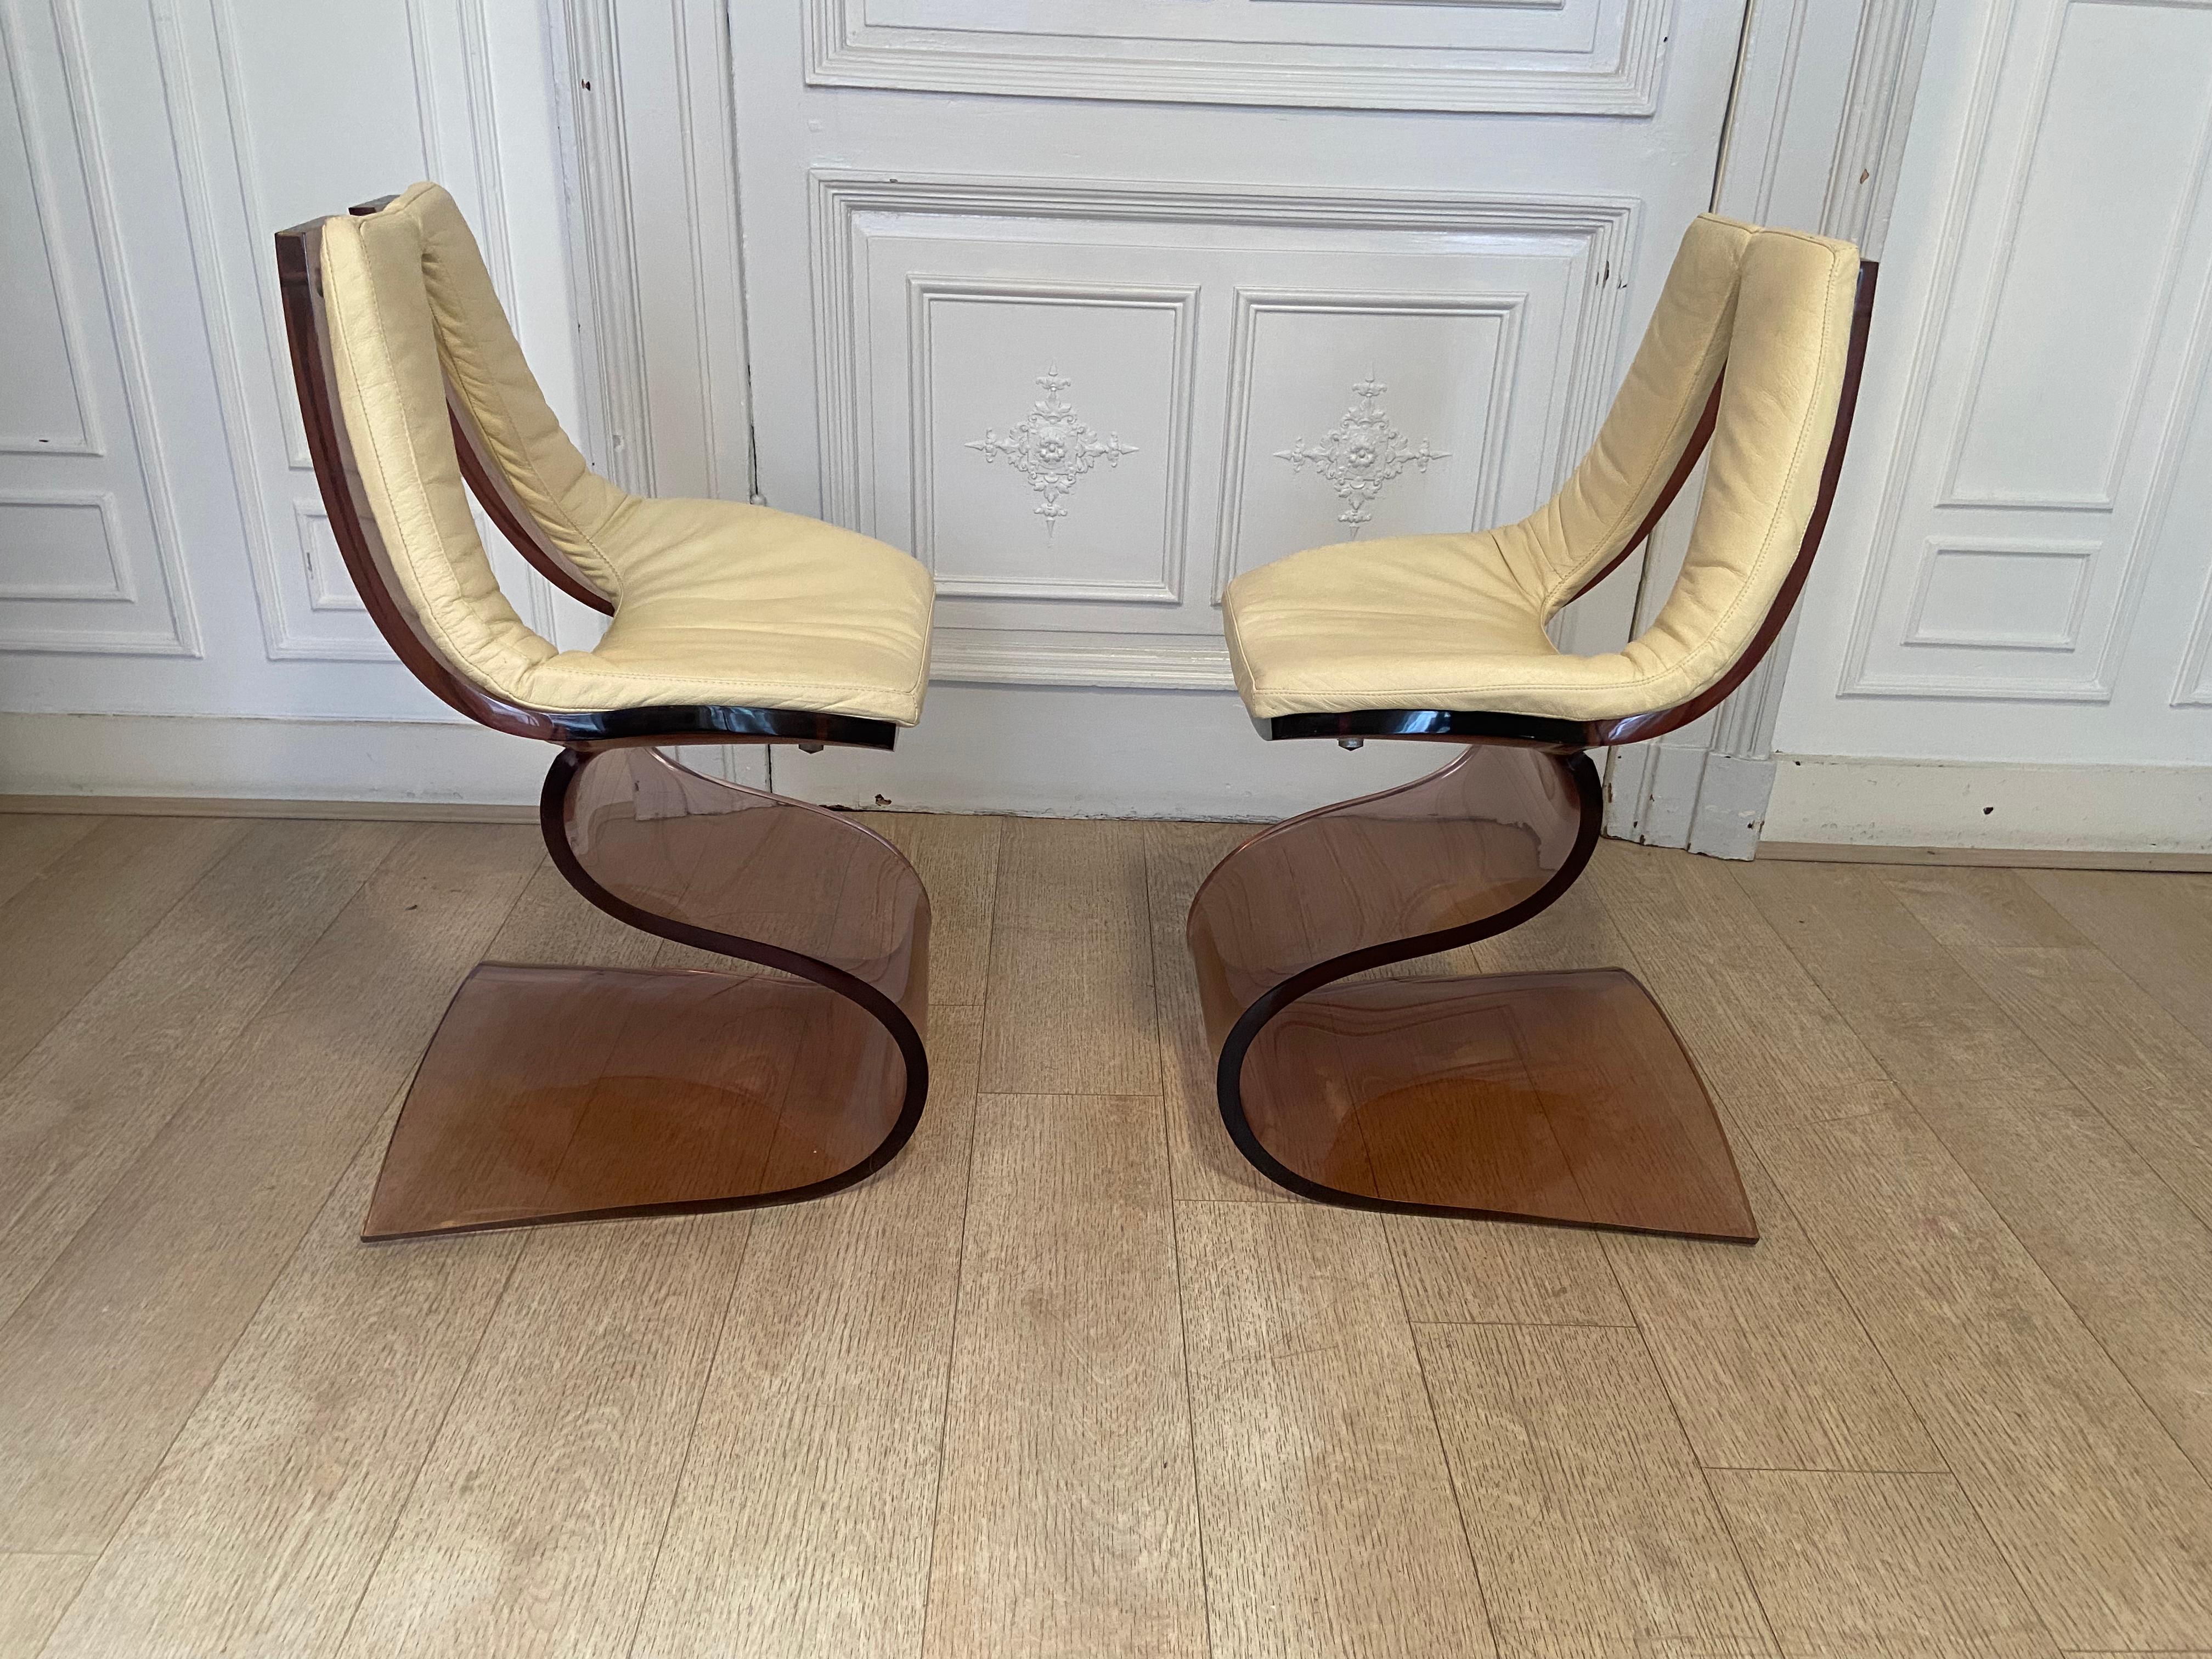 Michel Dumas Chairs, Plexiglass, 1970s For Sale 5